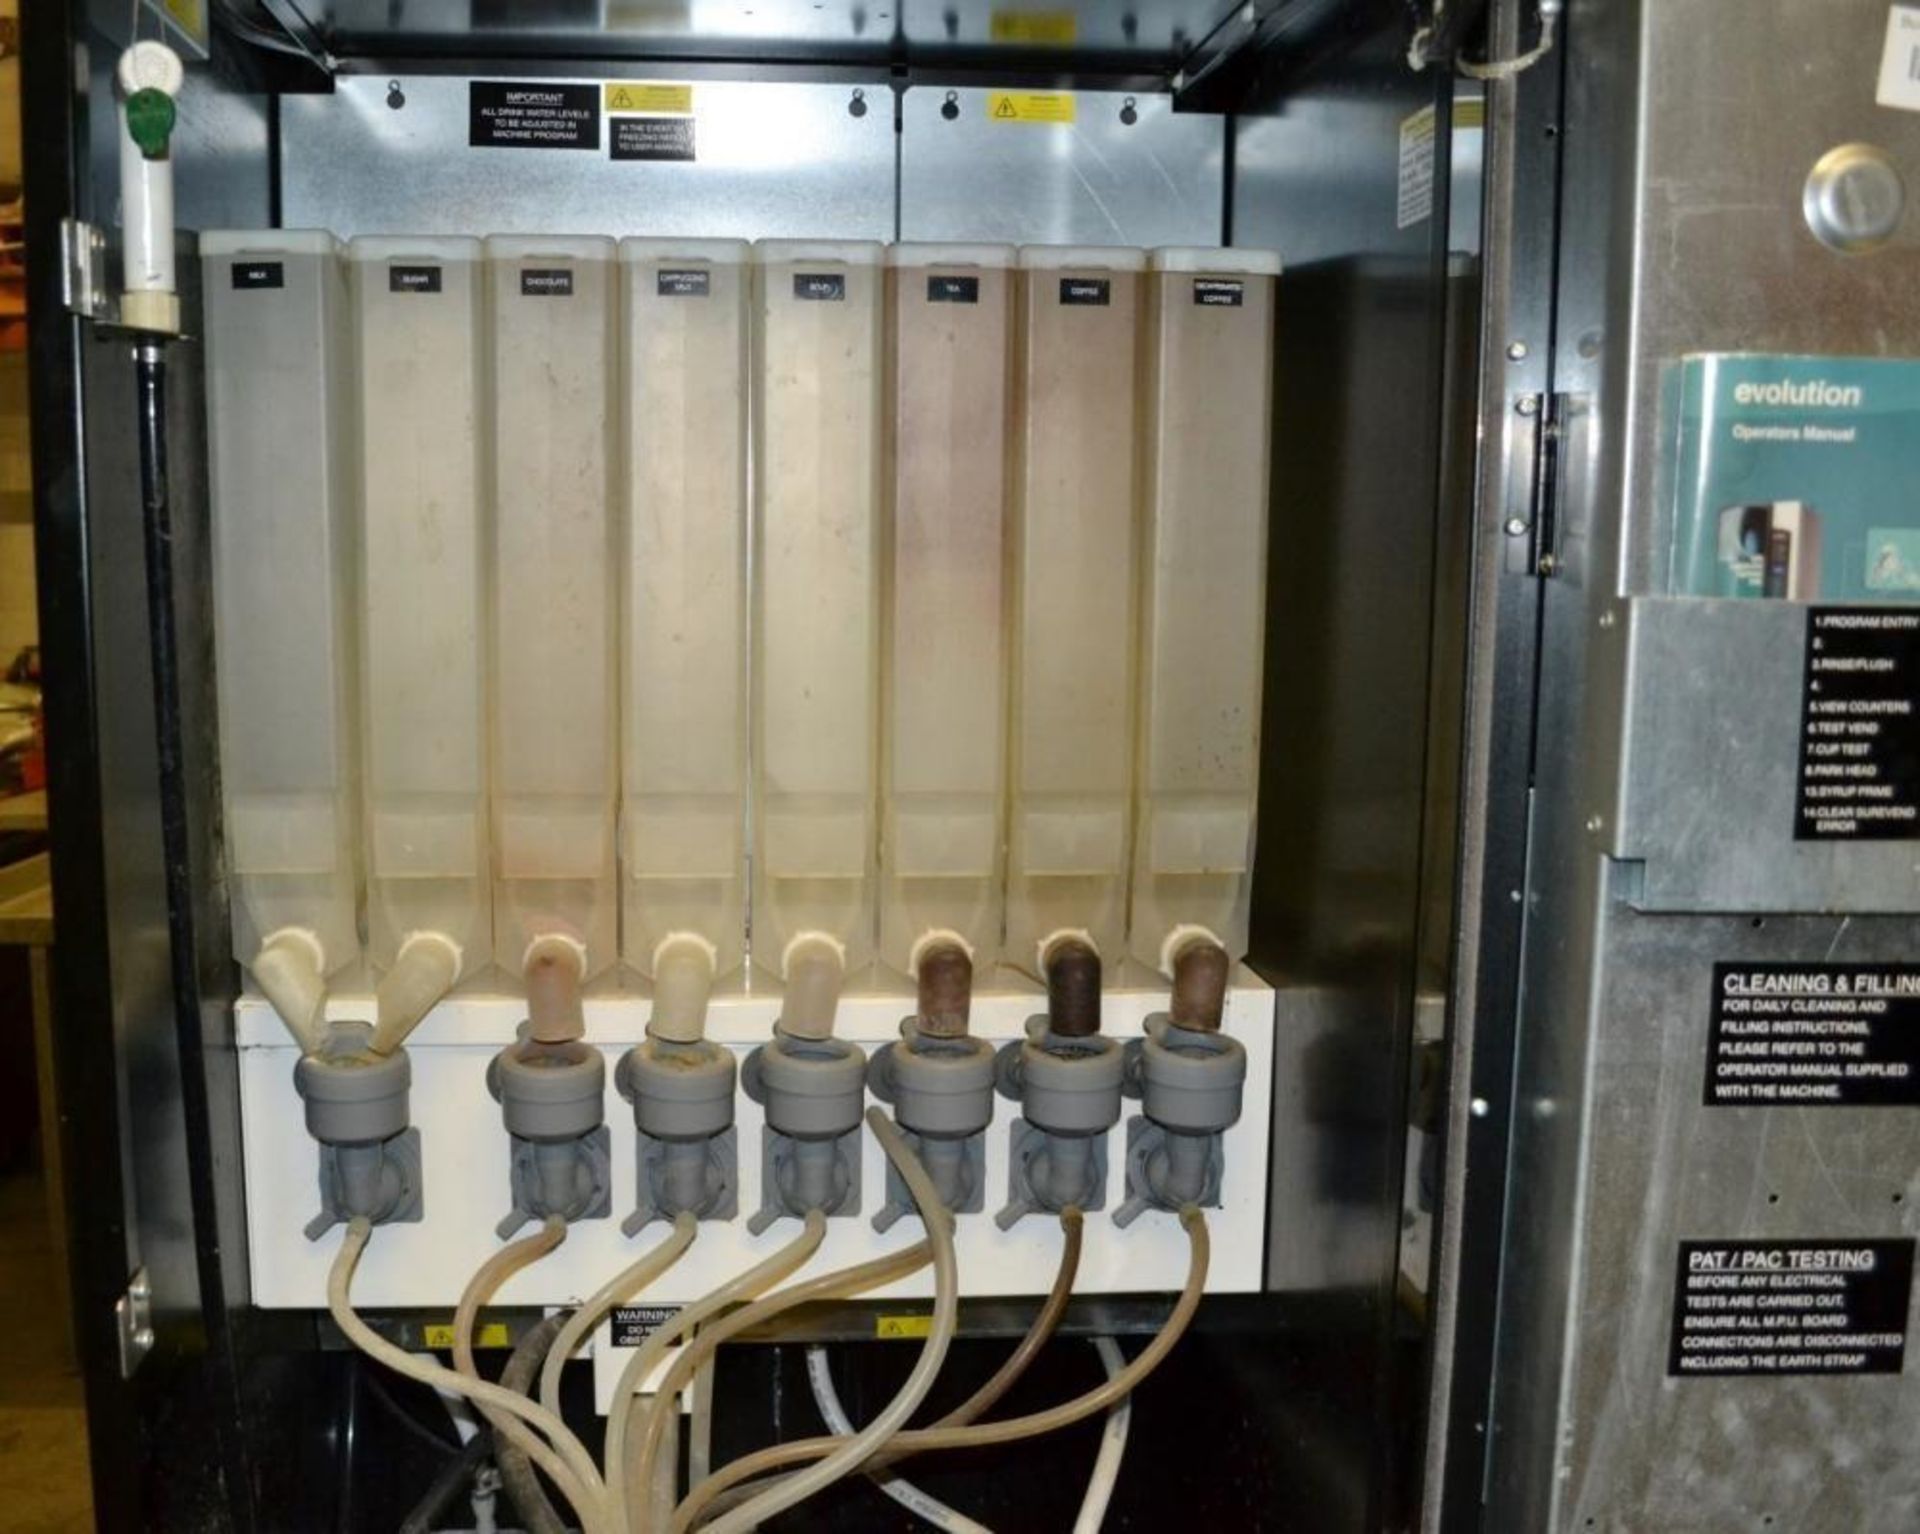 1 x Crane "Evolution" Hot Beverage Drinks Vending Machine With Keys - Year: 2009 - Recently Taken Fr - Image 7 of 14